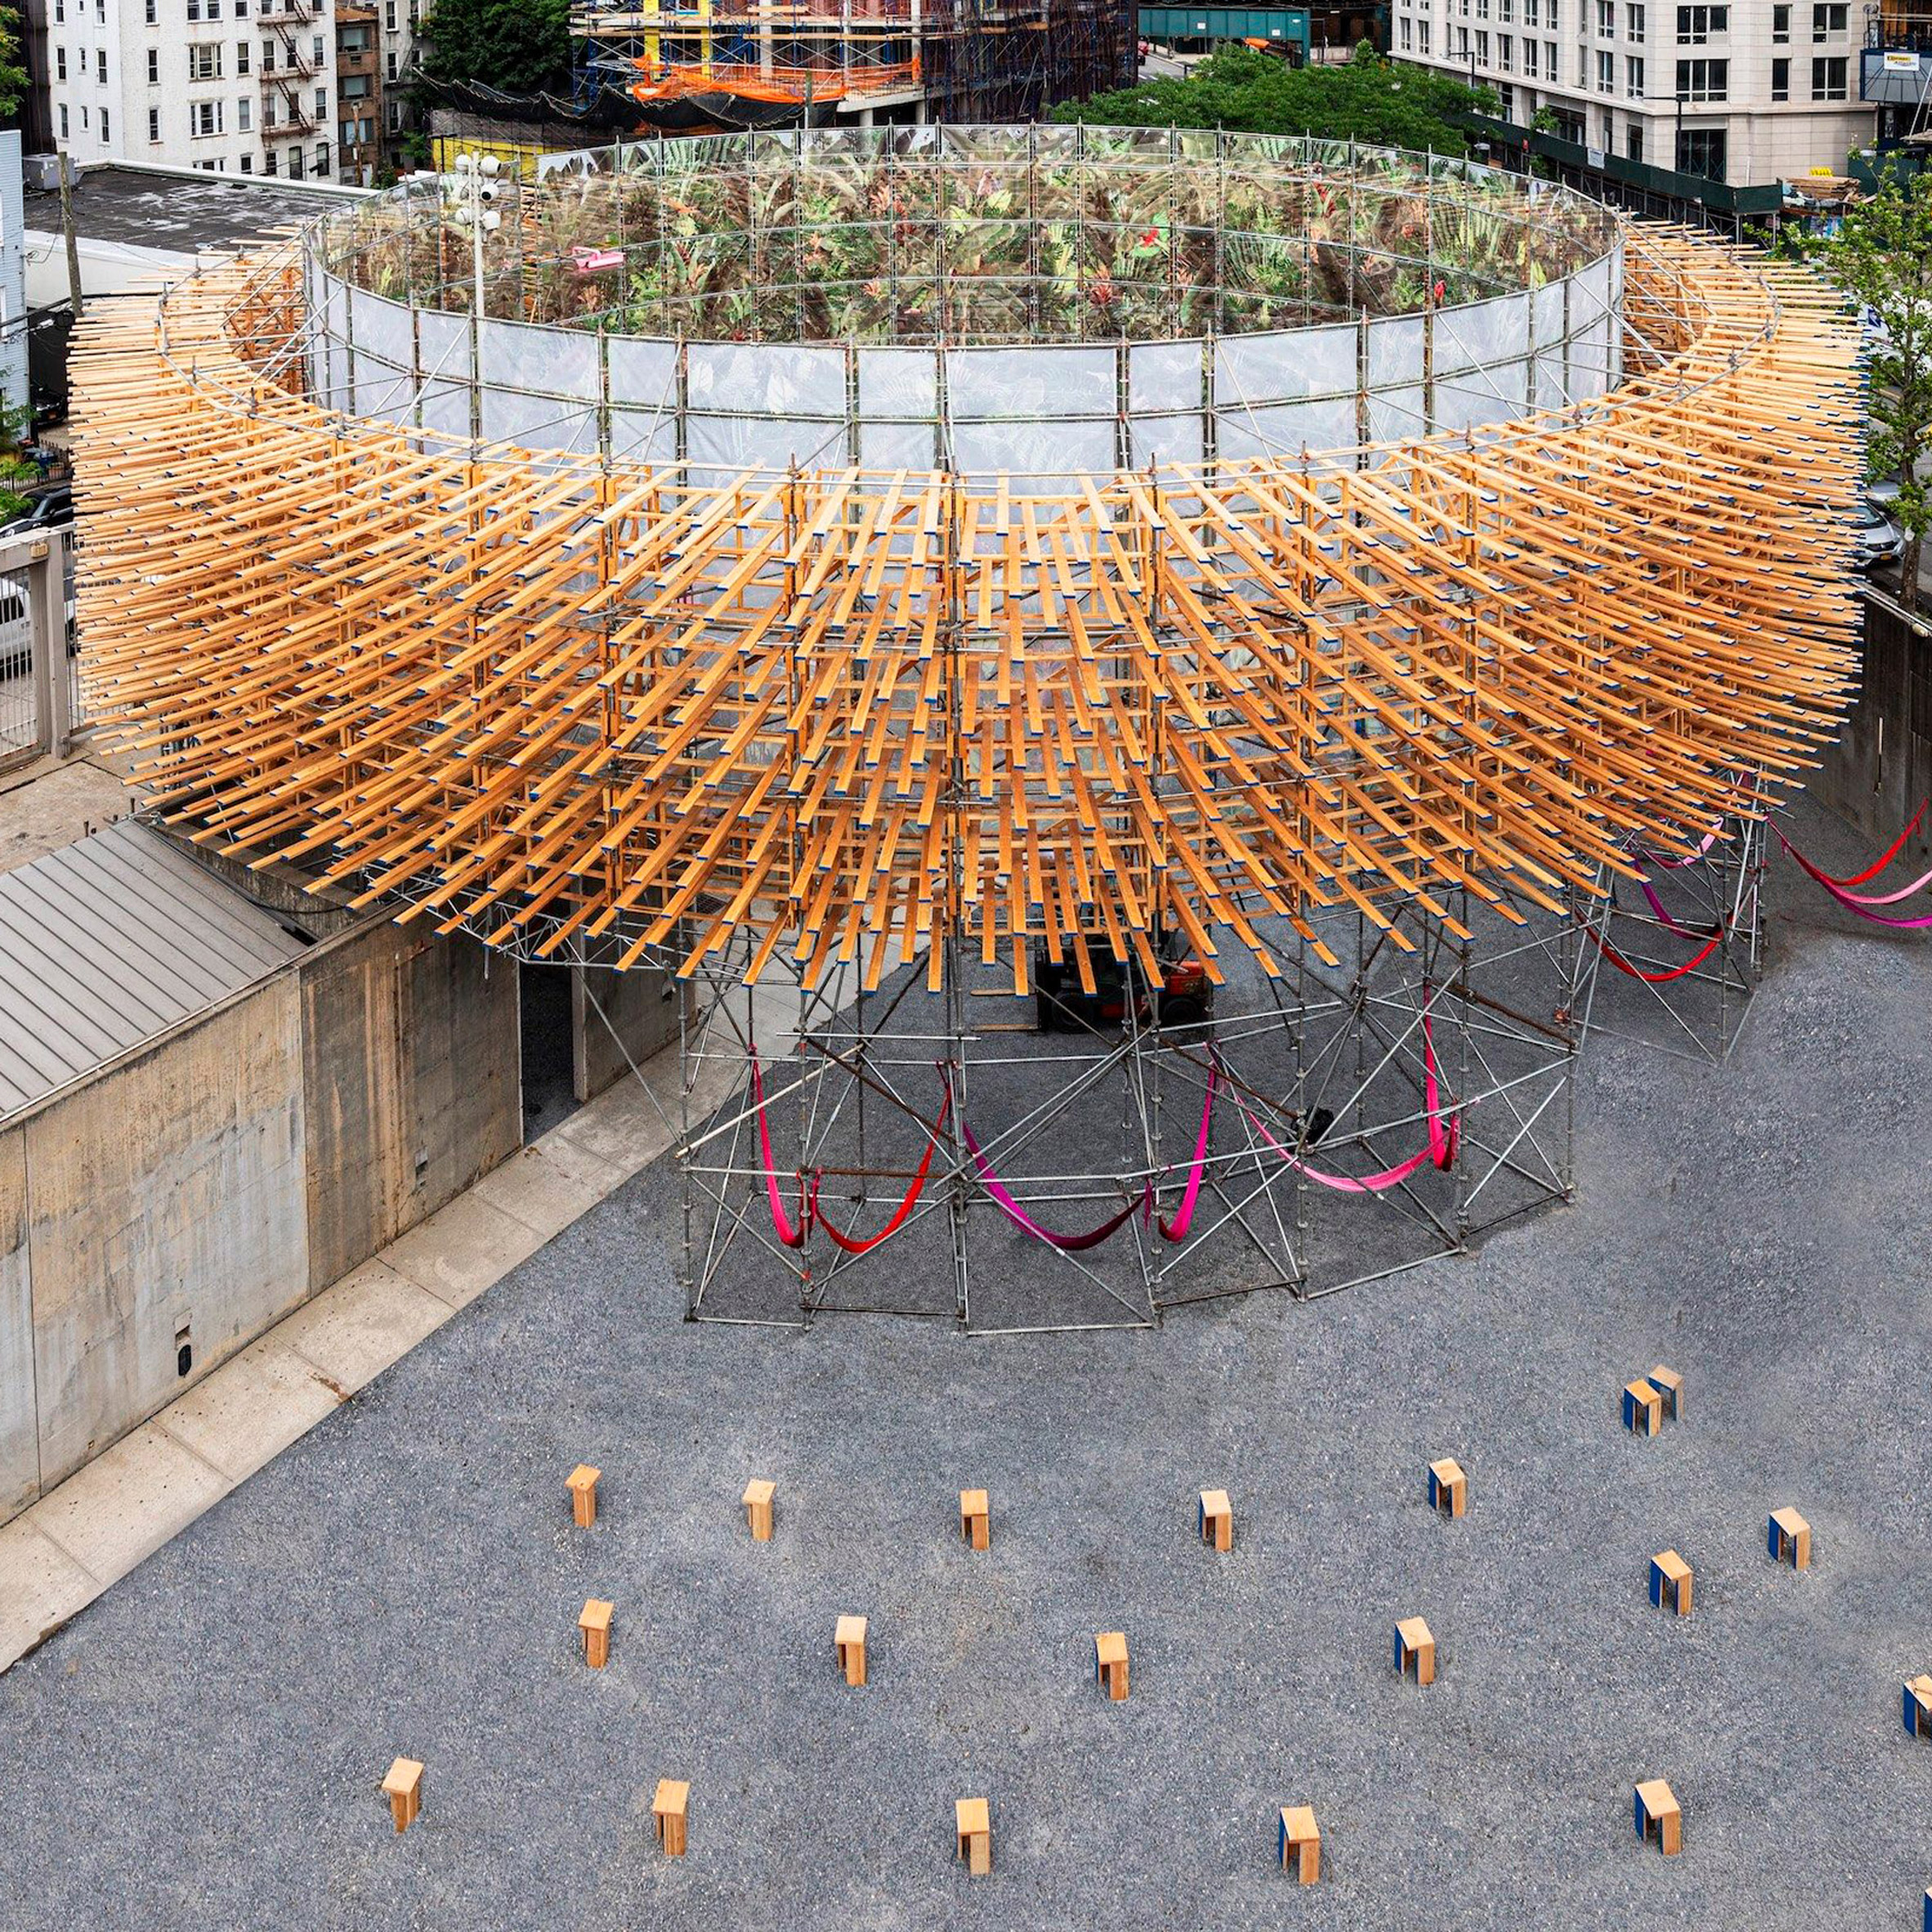 Sømil Jabeth Wilson Mauve Pedro & Juana builds spiky "junglescape" in MoMA PS1 courtyard